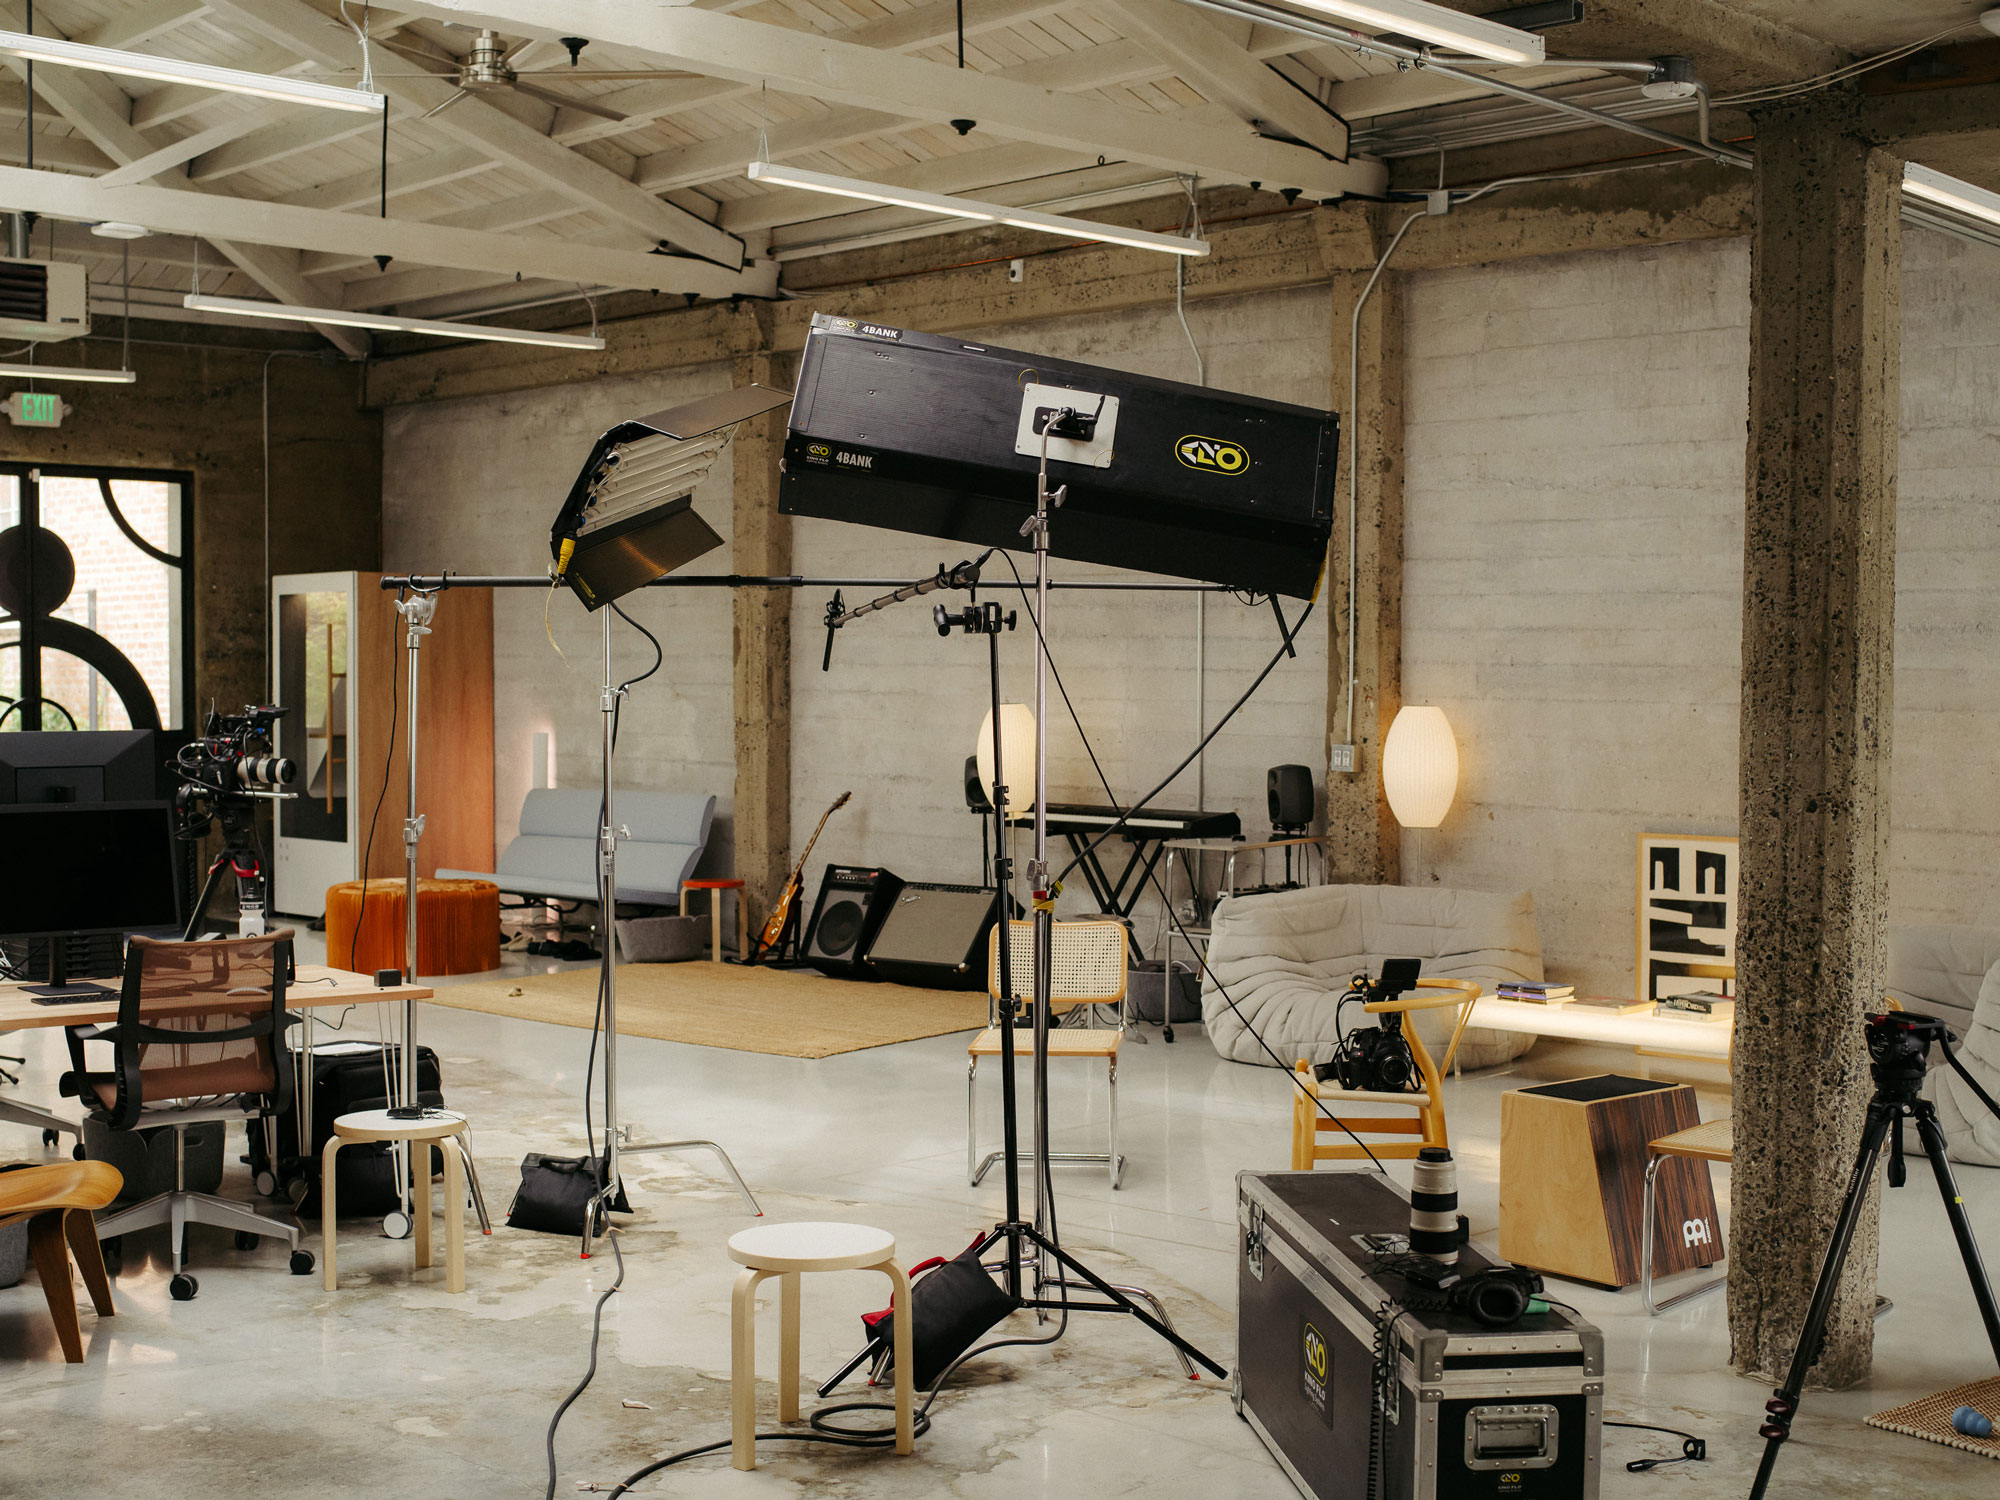 Notion's headquarters transformed into a film studio.